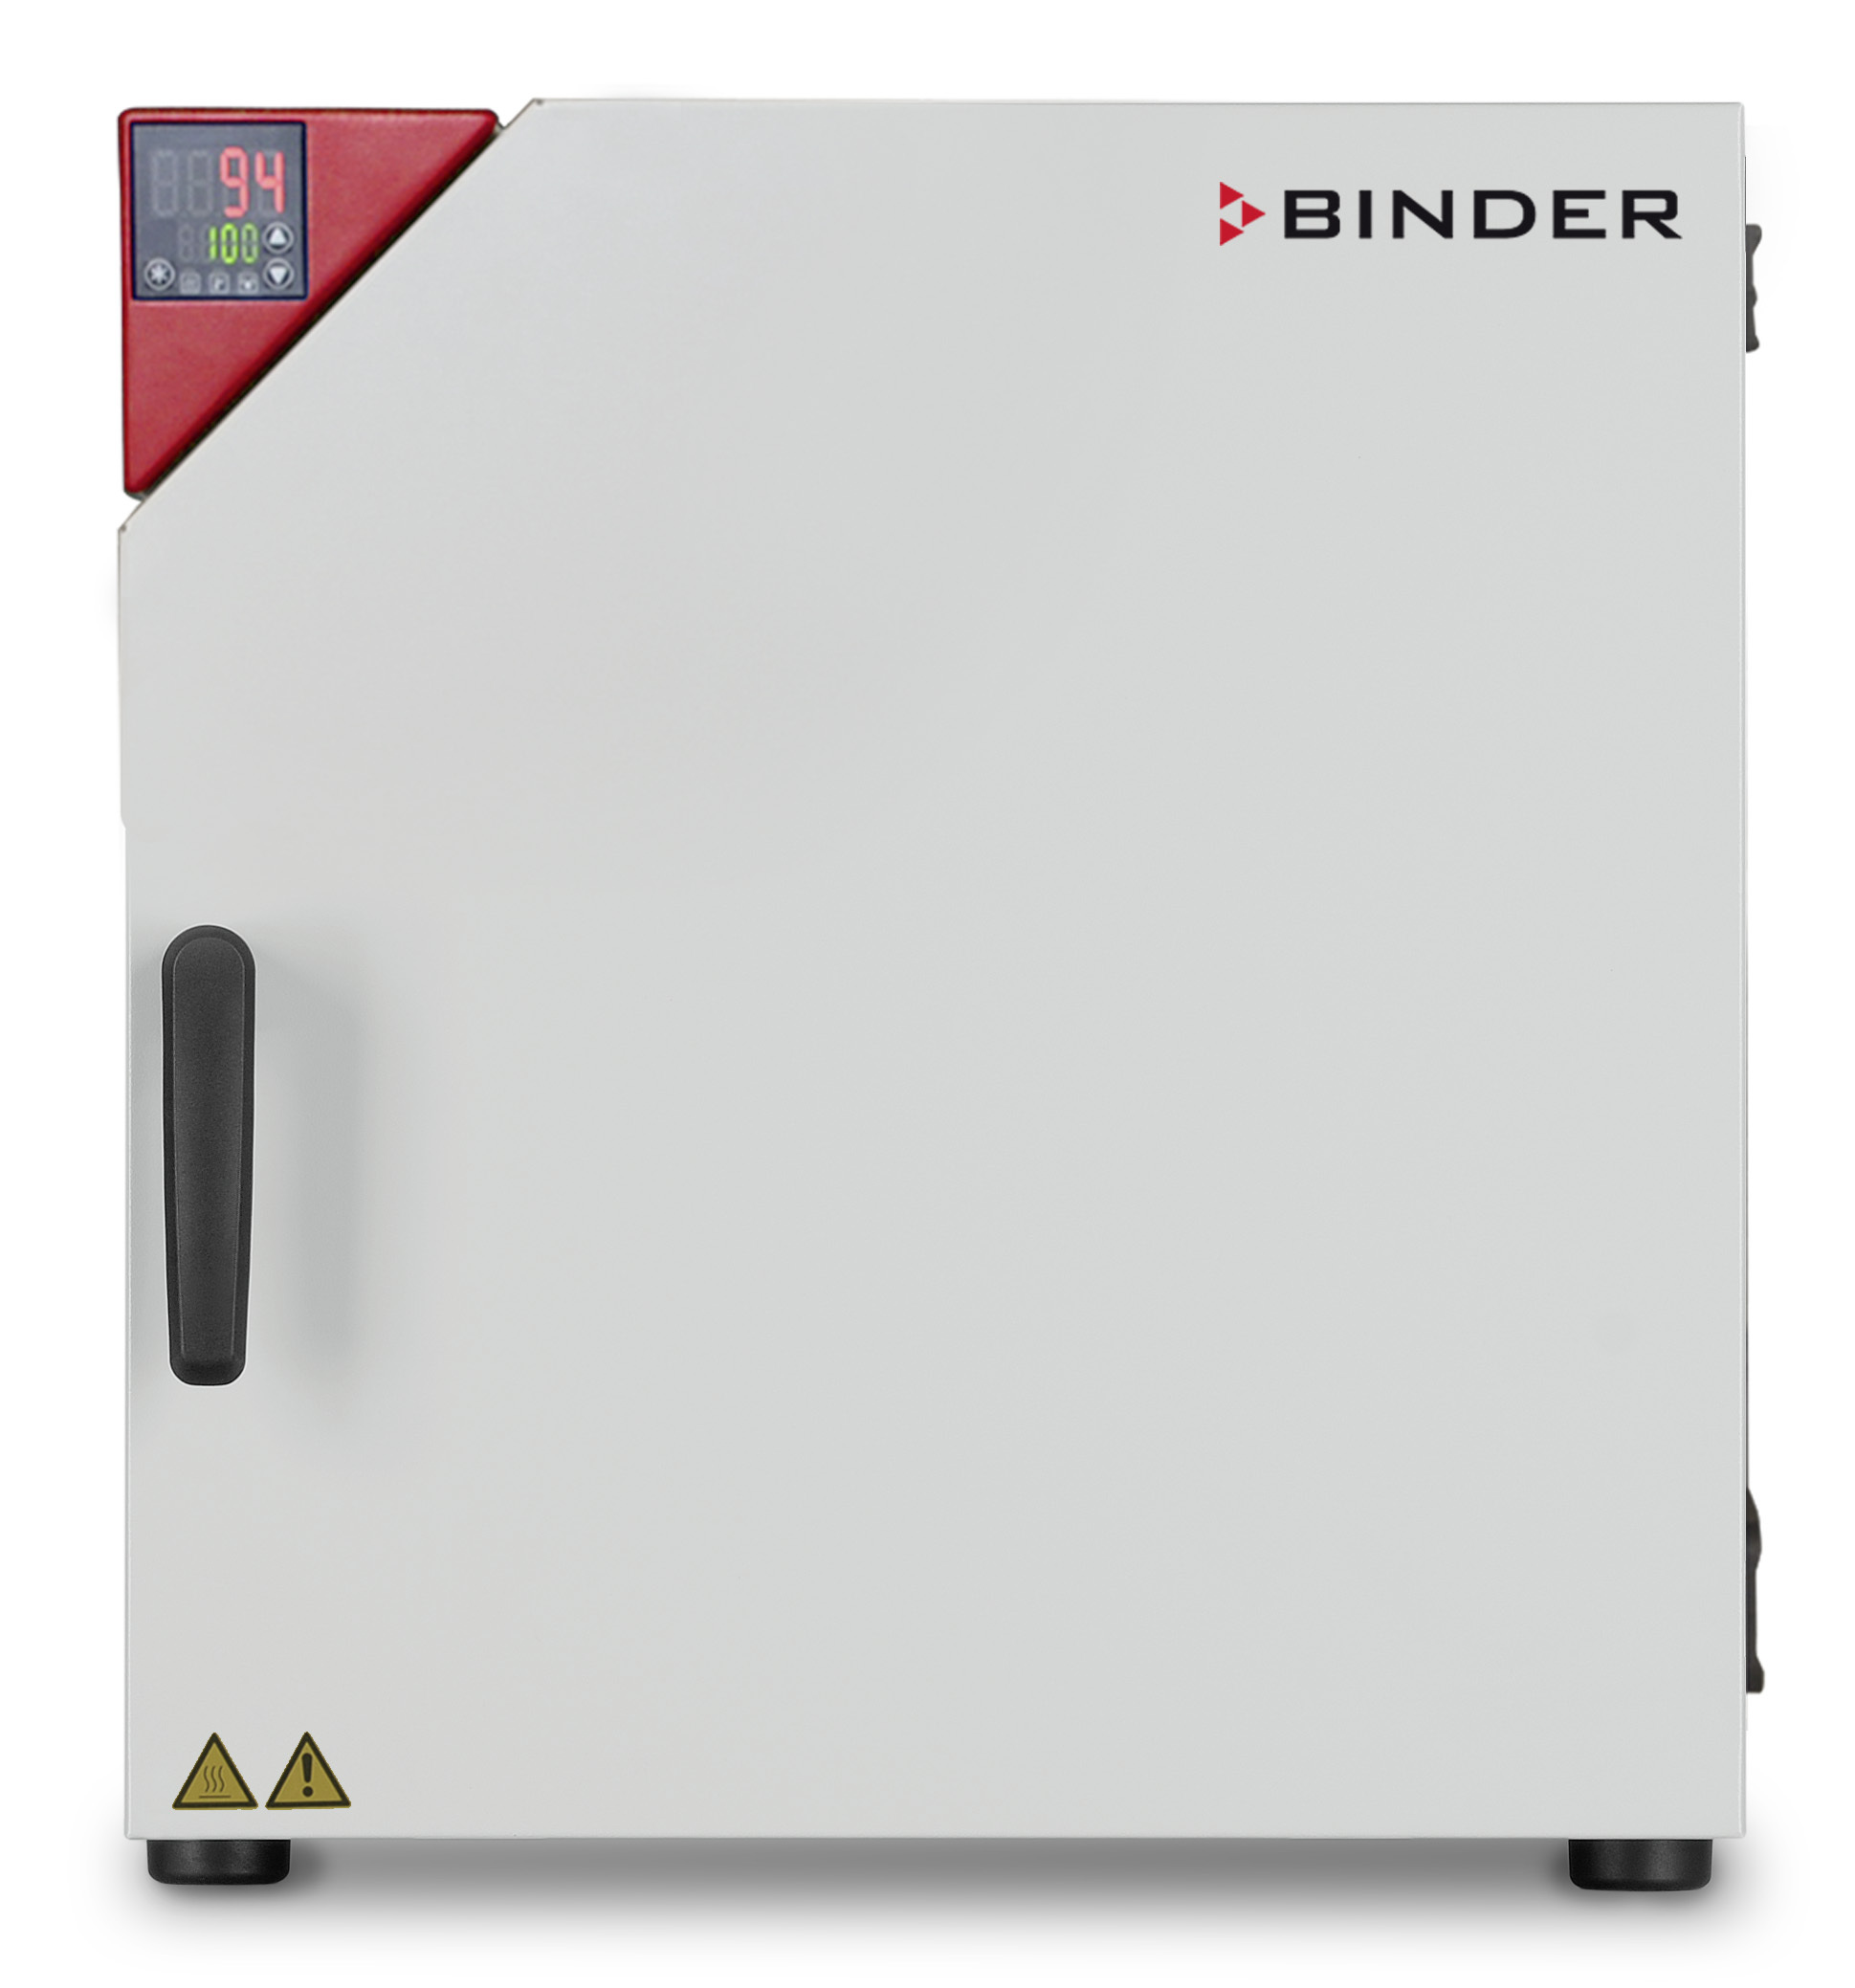 干燥箱BINDER ED-S 56